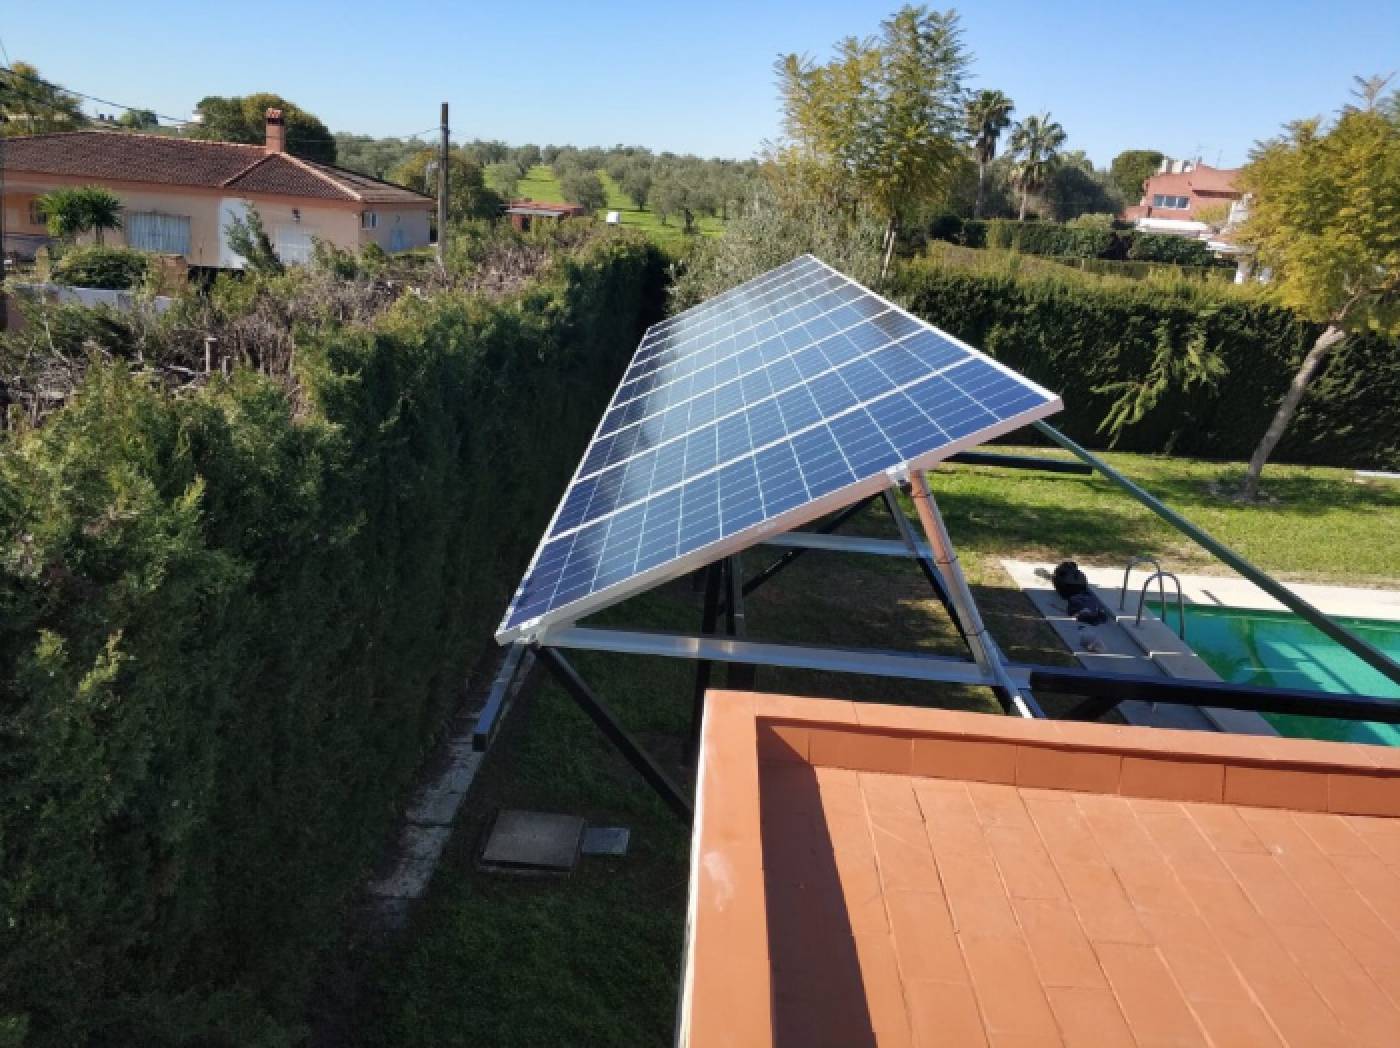 Geesol solar panels and renewable energy